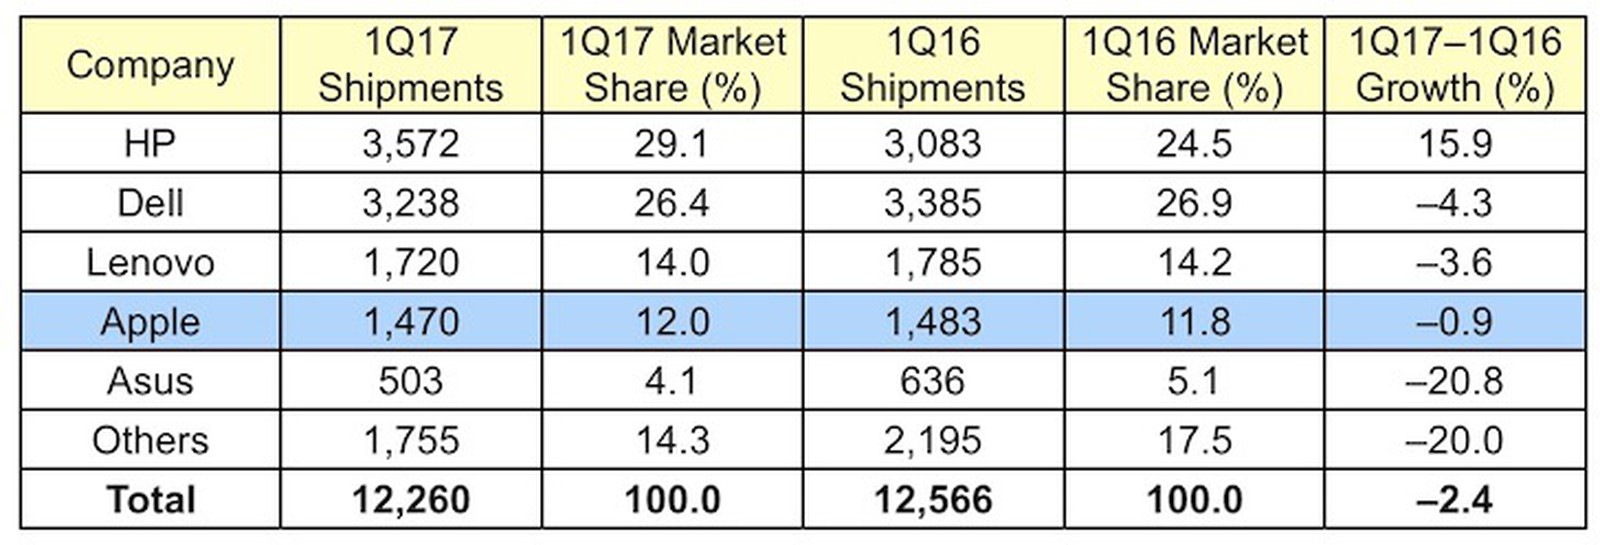 windows vs mac market share